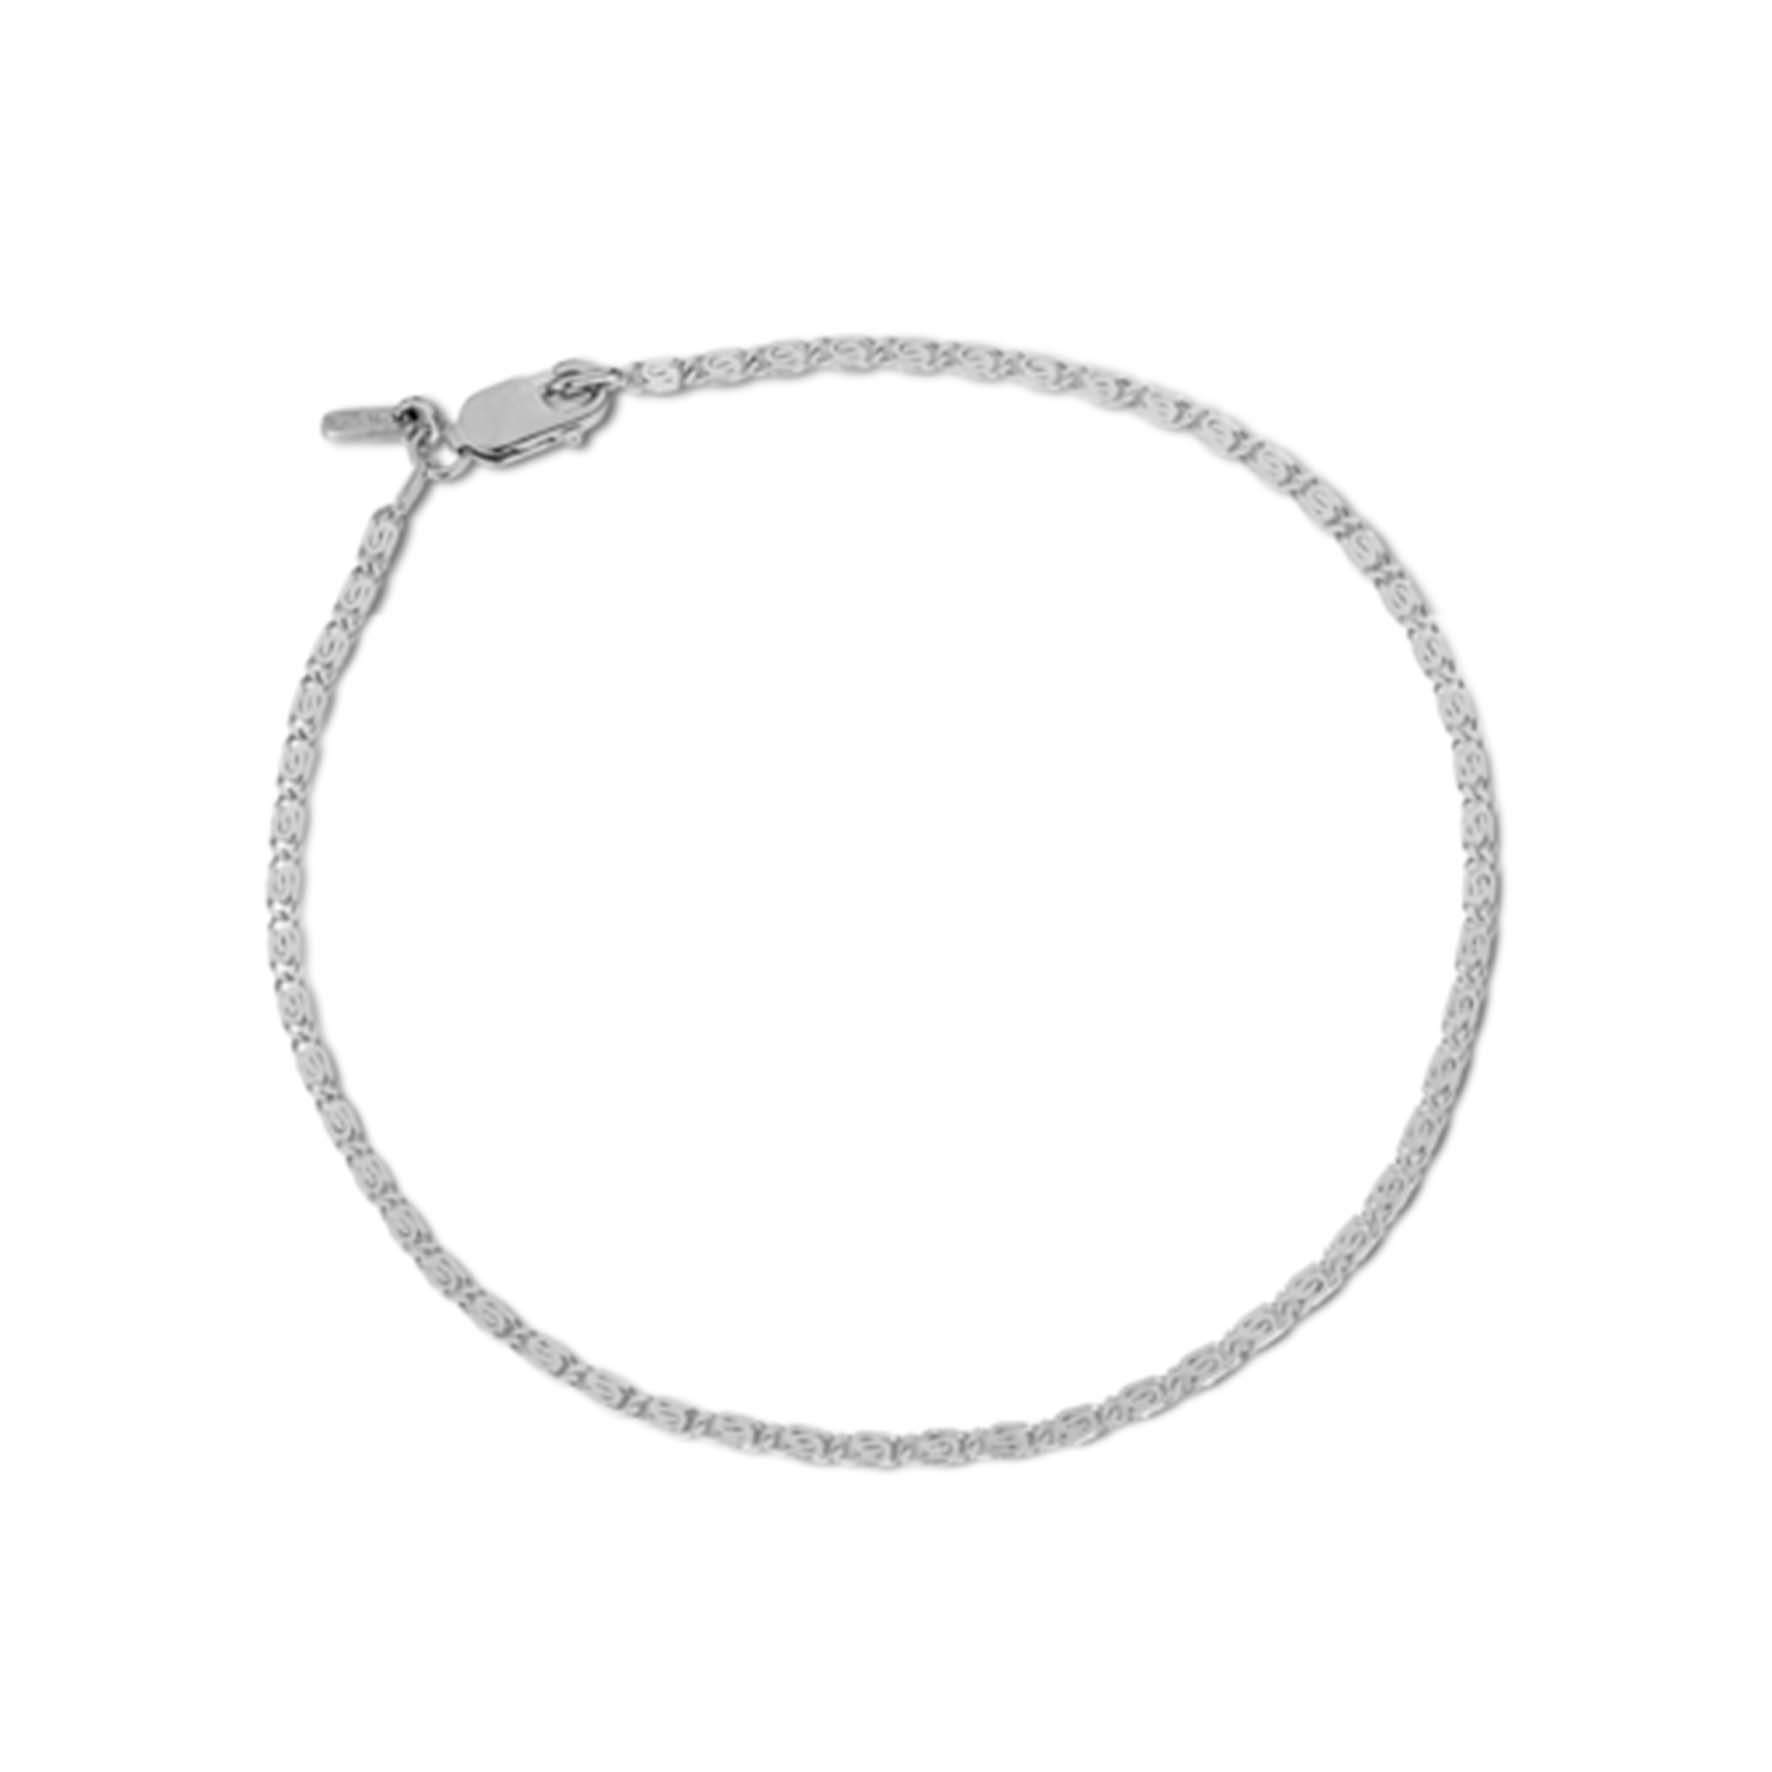 Envision Chain Bracelet fra Jane Kønig i Sølv Sterling 925